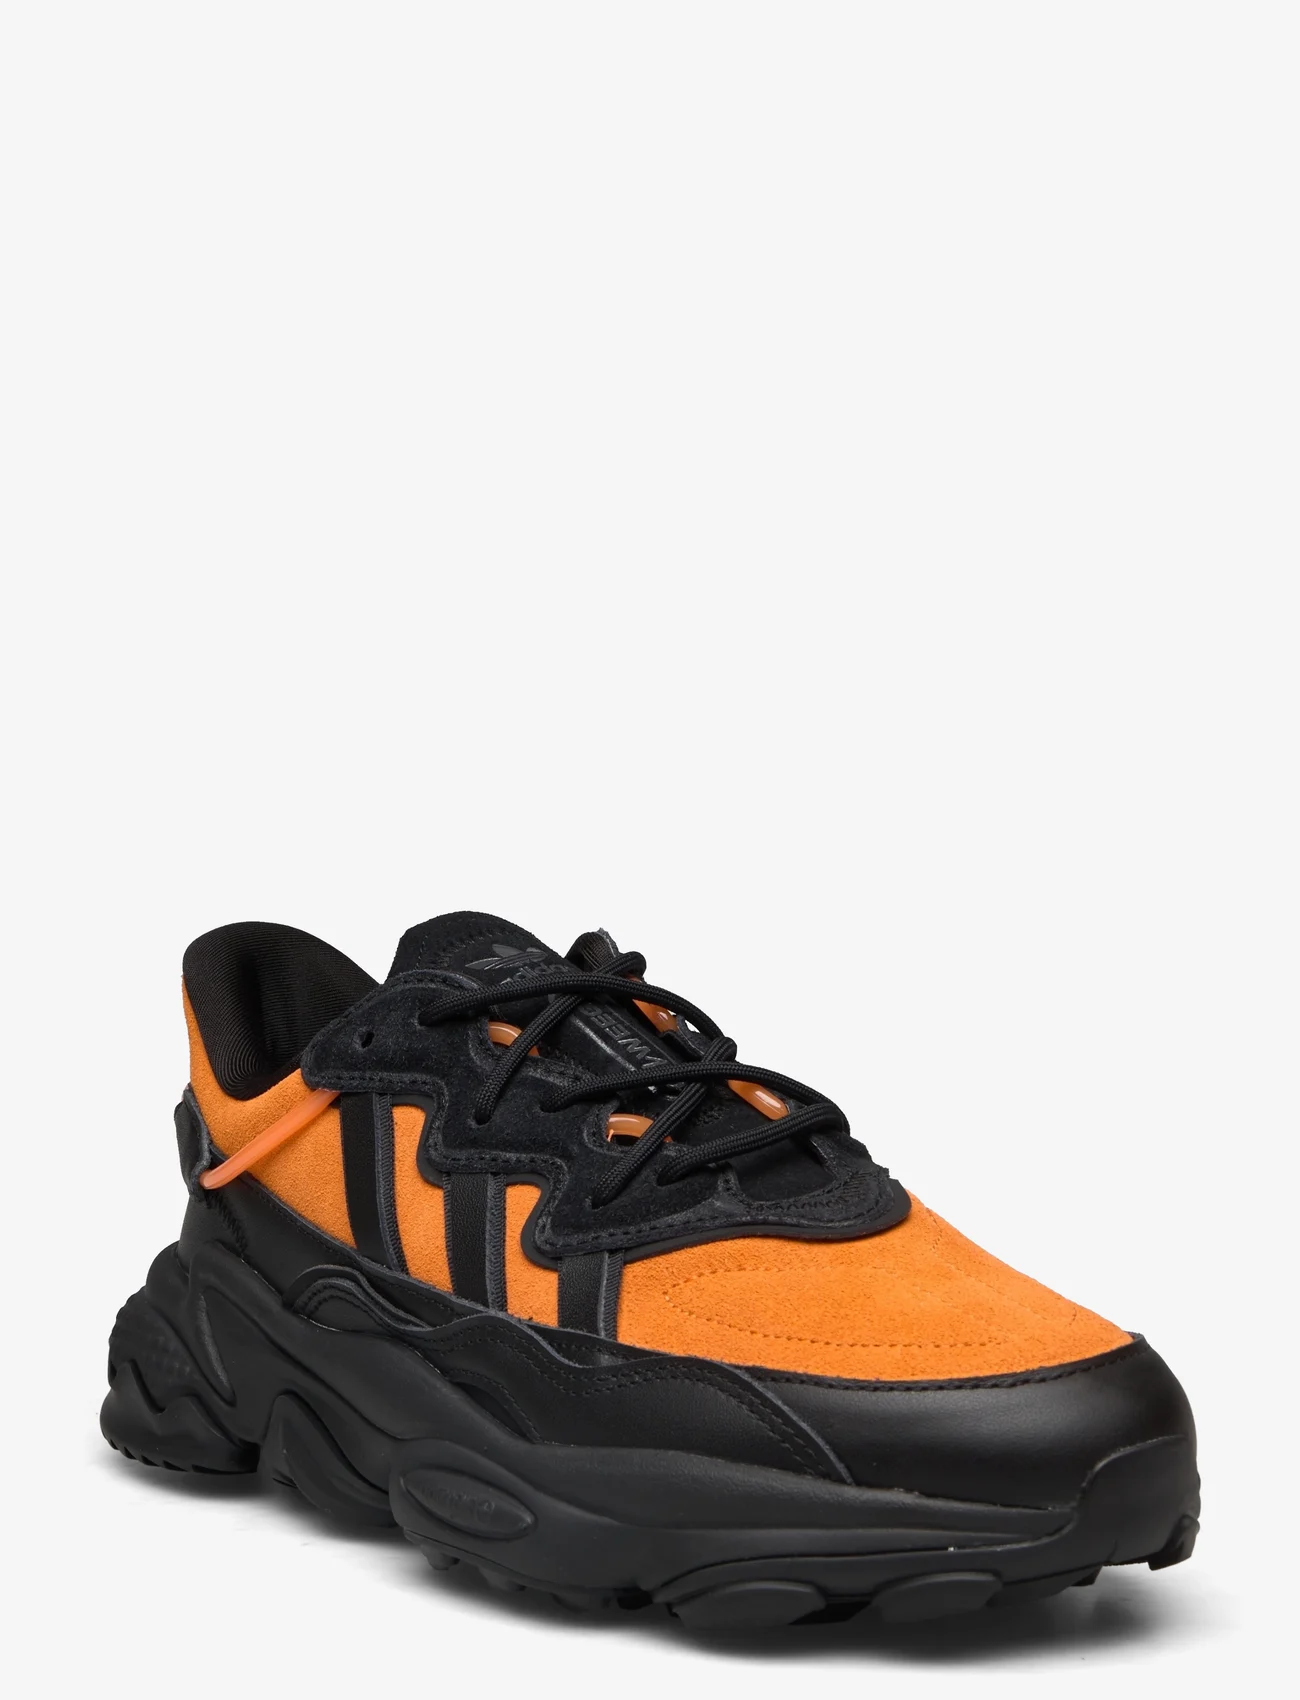 adidas Originals - OZWEEGO Shoes - low top sneakers - orange/cblack/gresix - 0